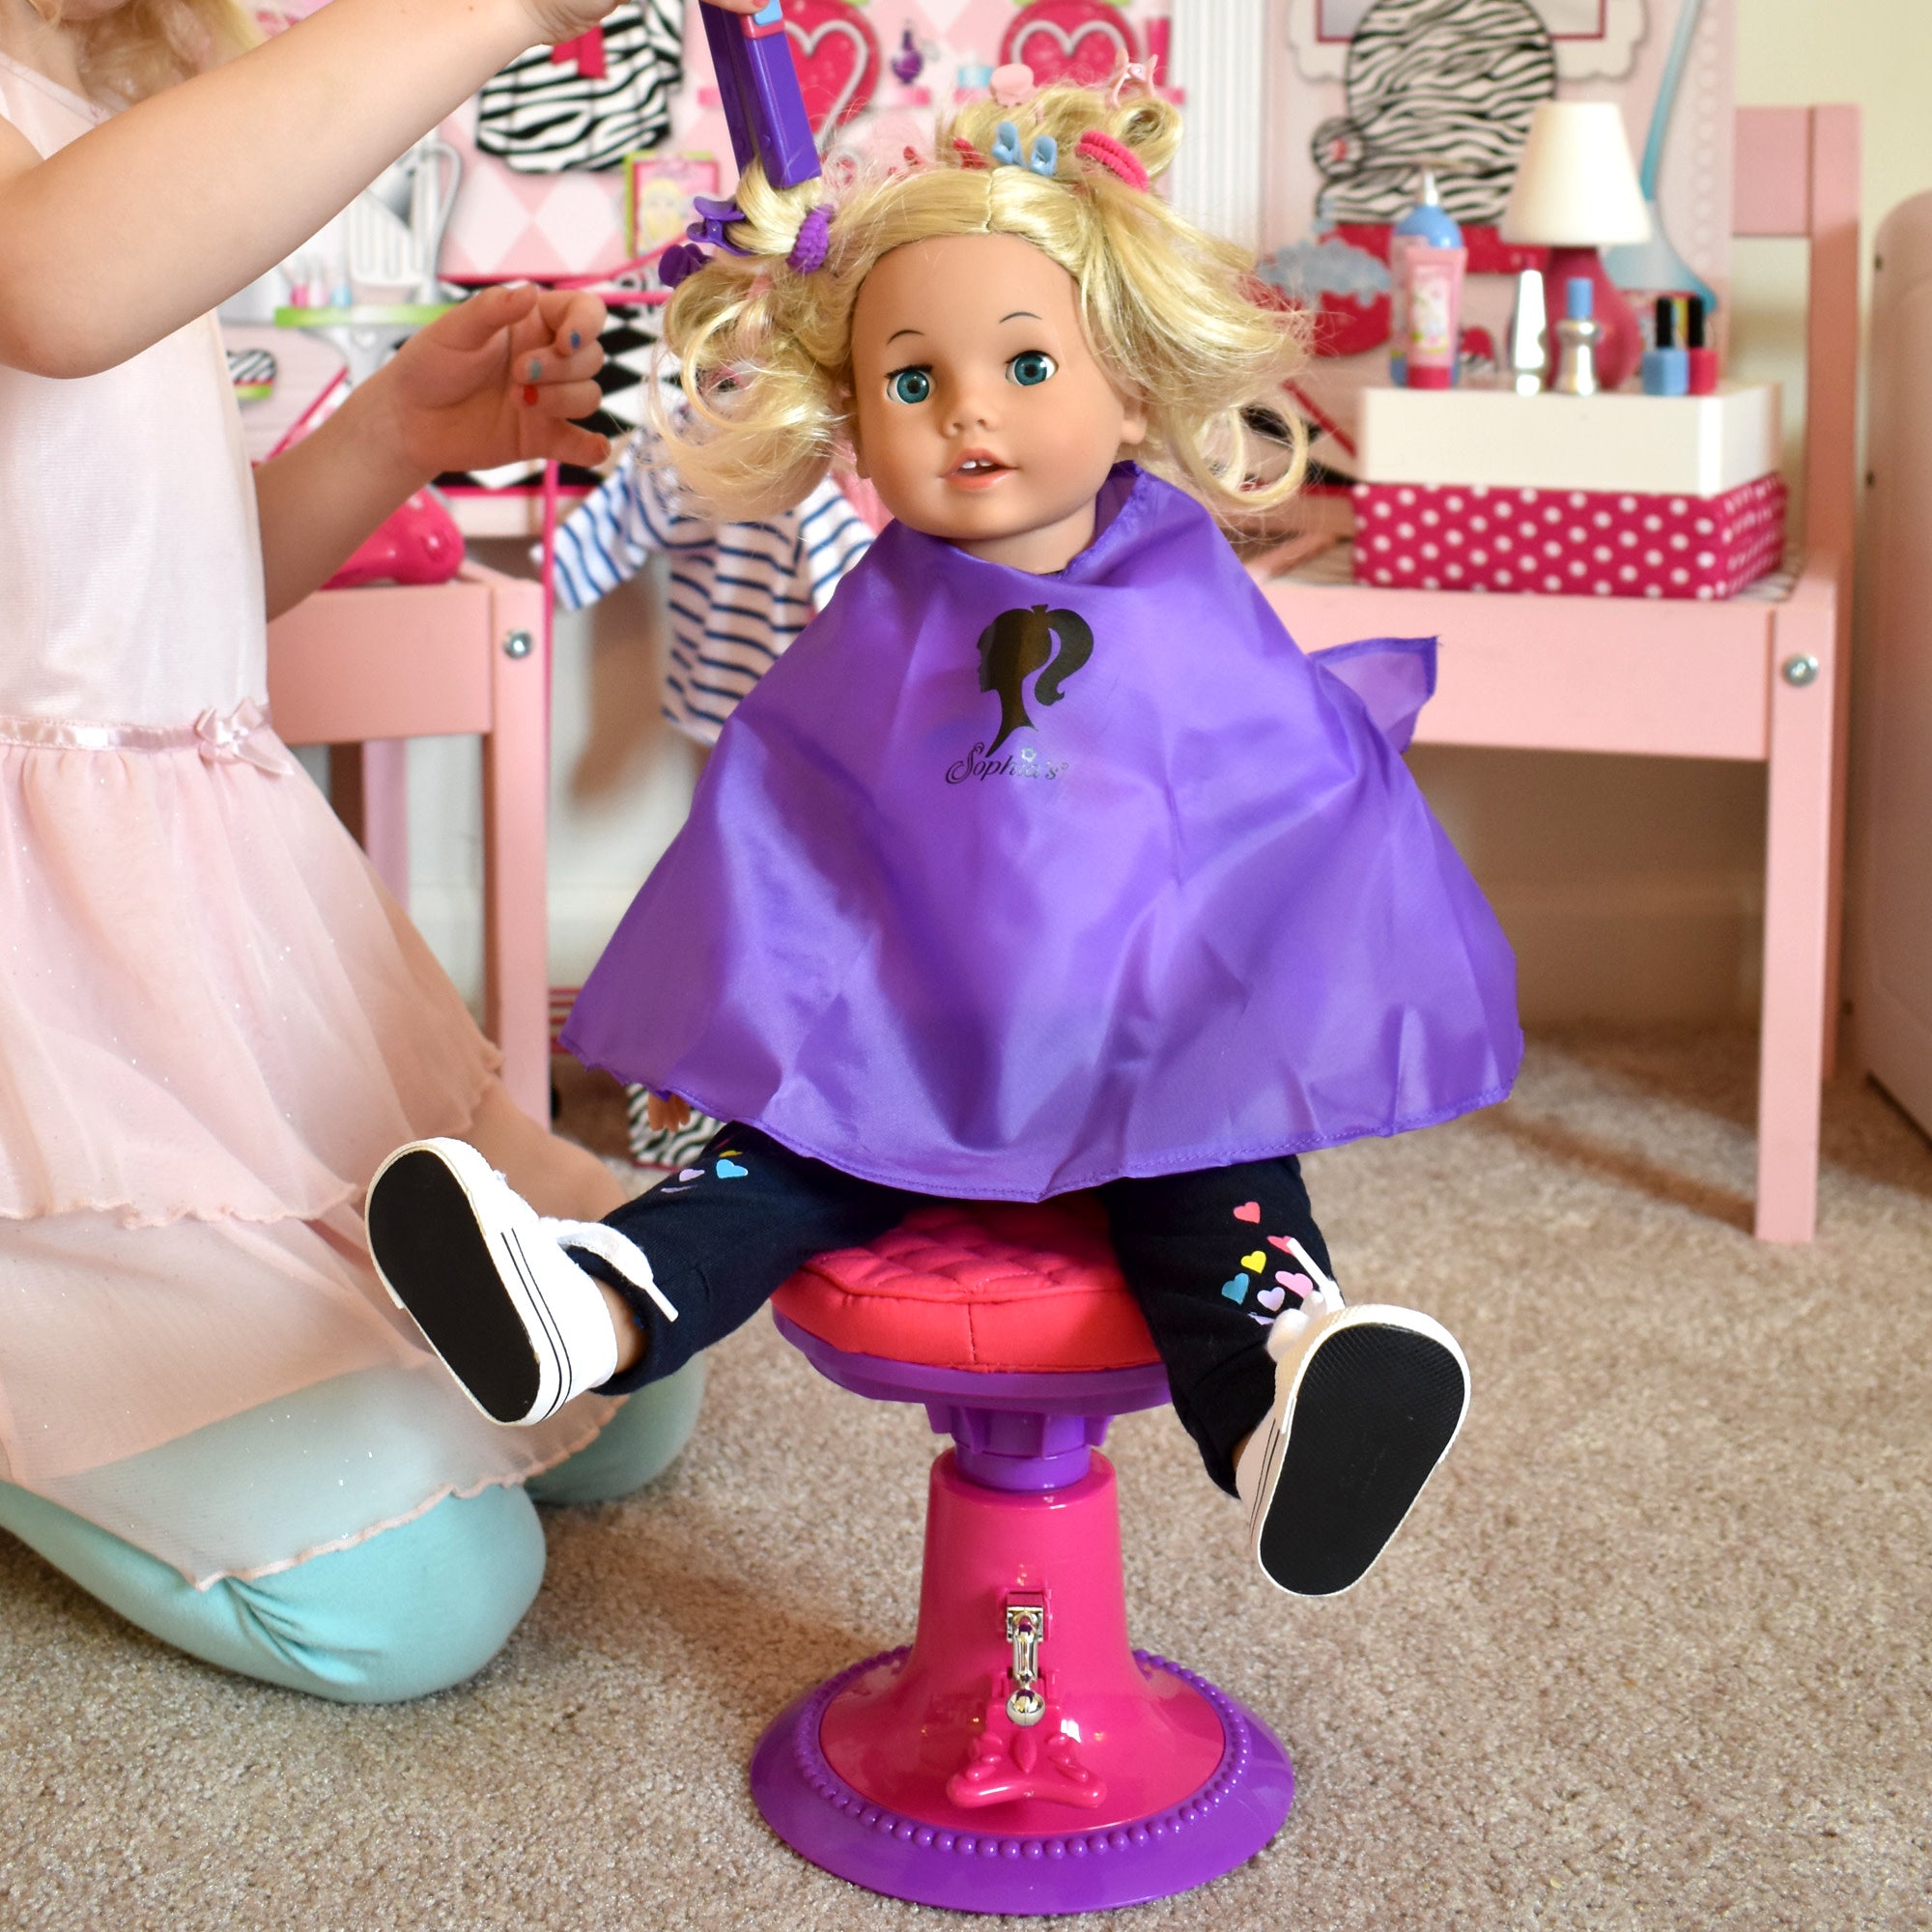 Sophia’s Hair Salon Complete 30 Piece Play Set for 18" Dolls